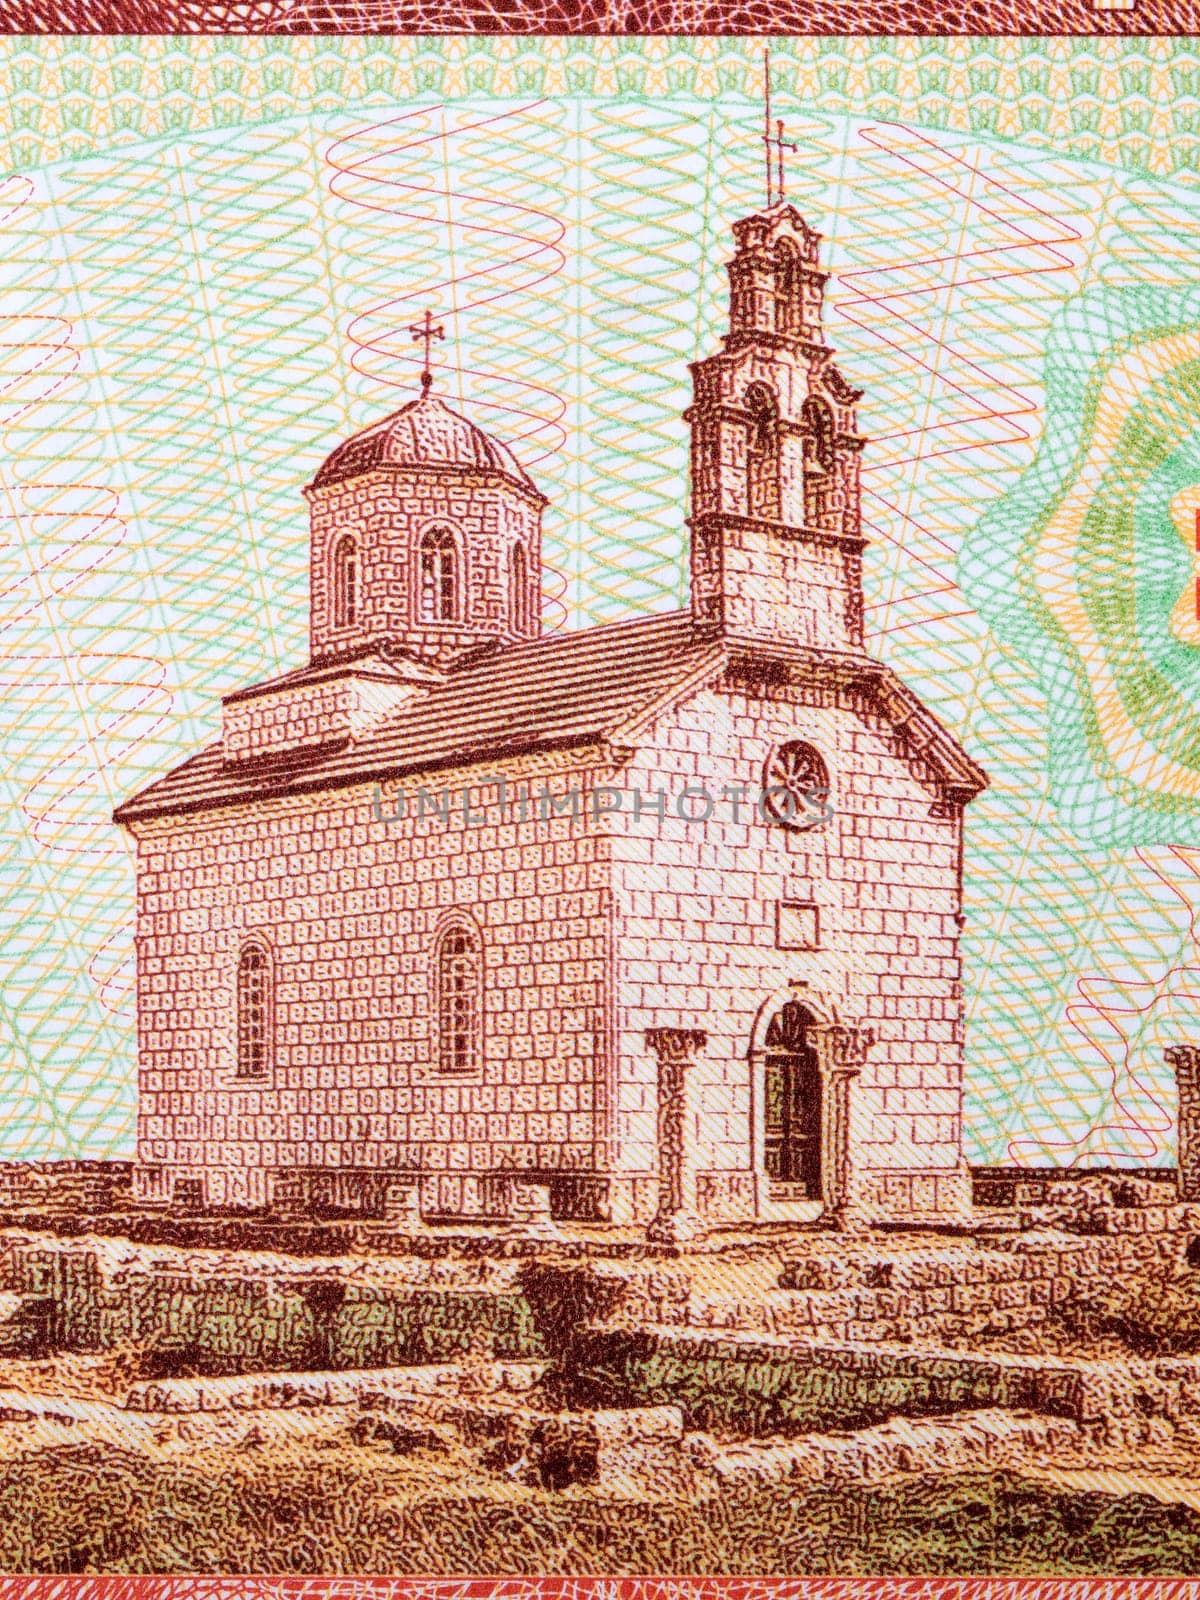 Manor church - Cetinje in Montenegro from money 